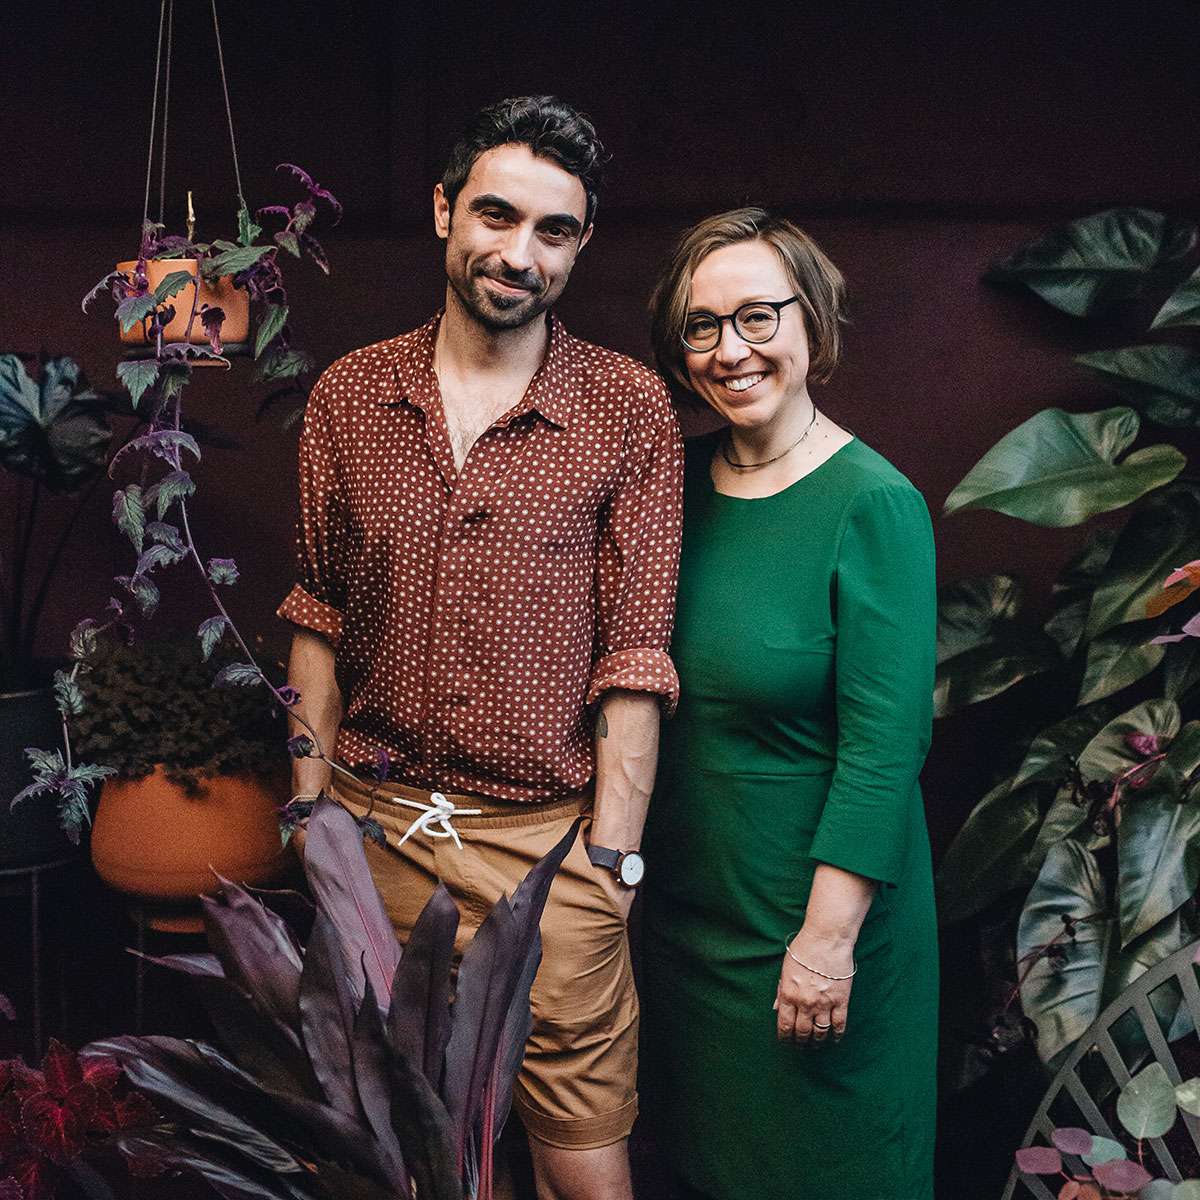 Igor Josifovic and Judith de Graaff - Founders of Urban Jungle Bloggers